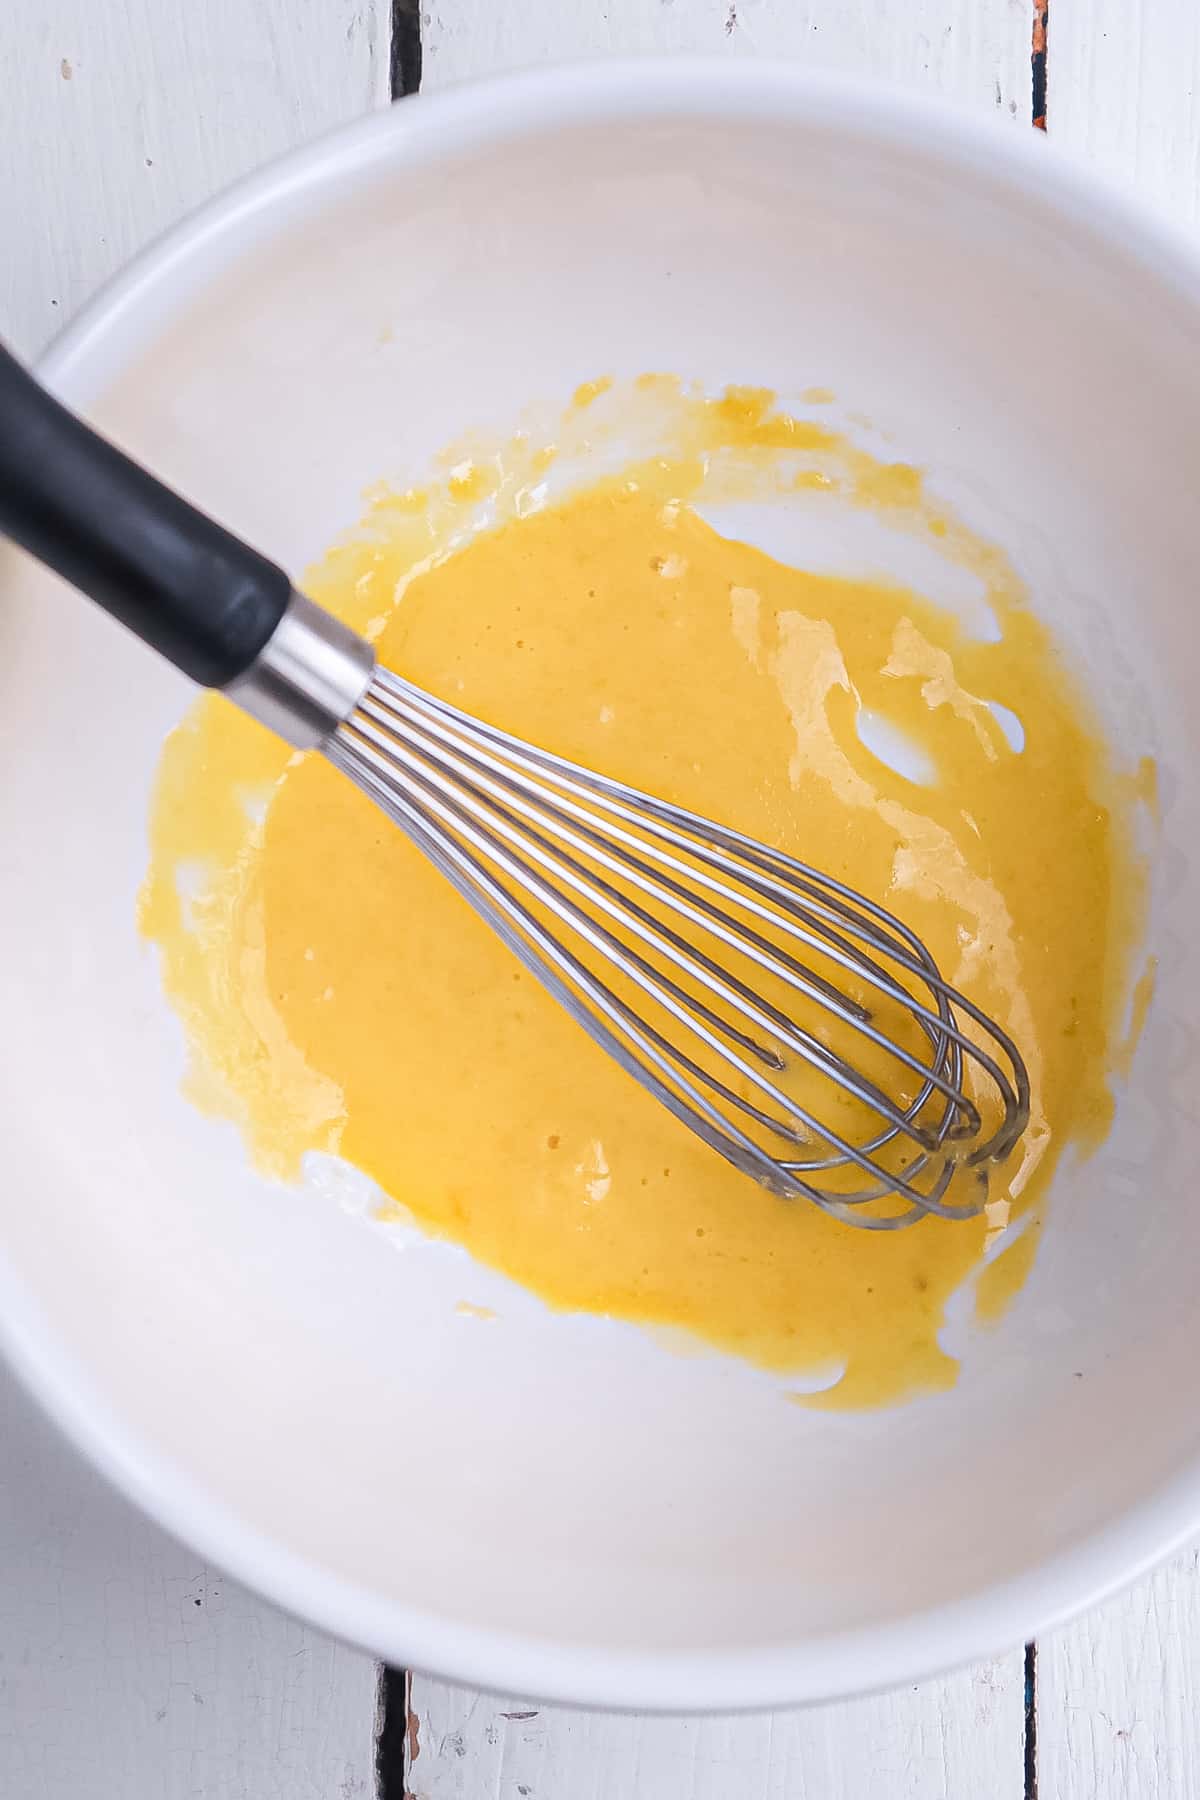 oil beginning to be added to egg yolk.